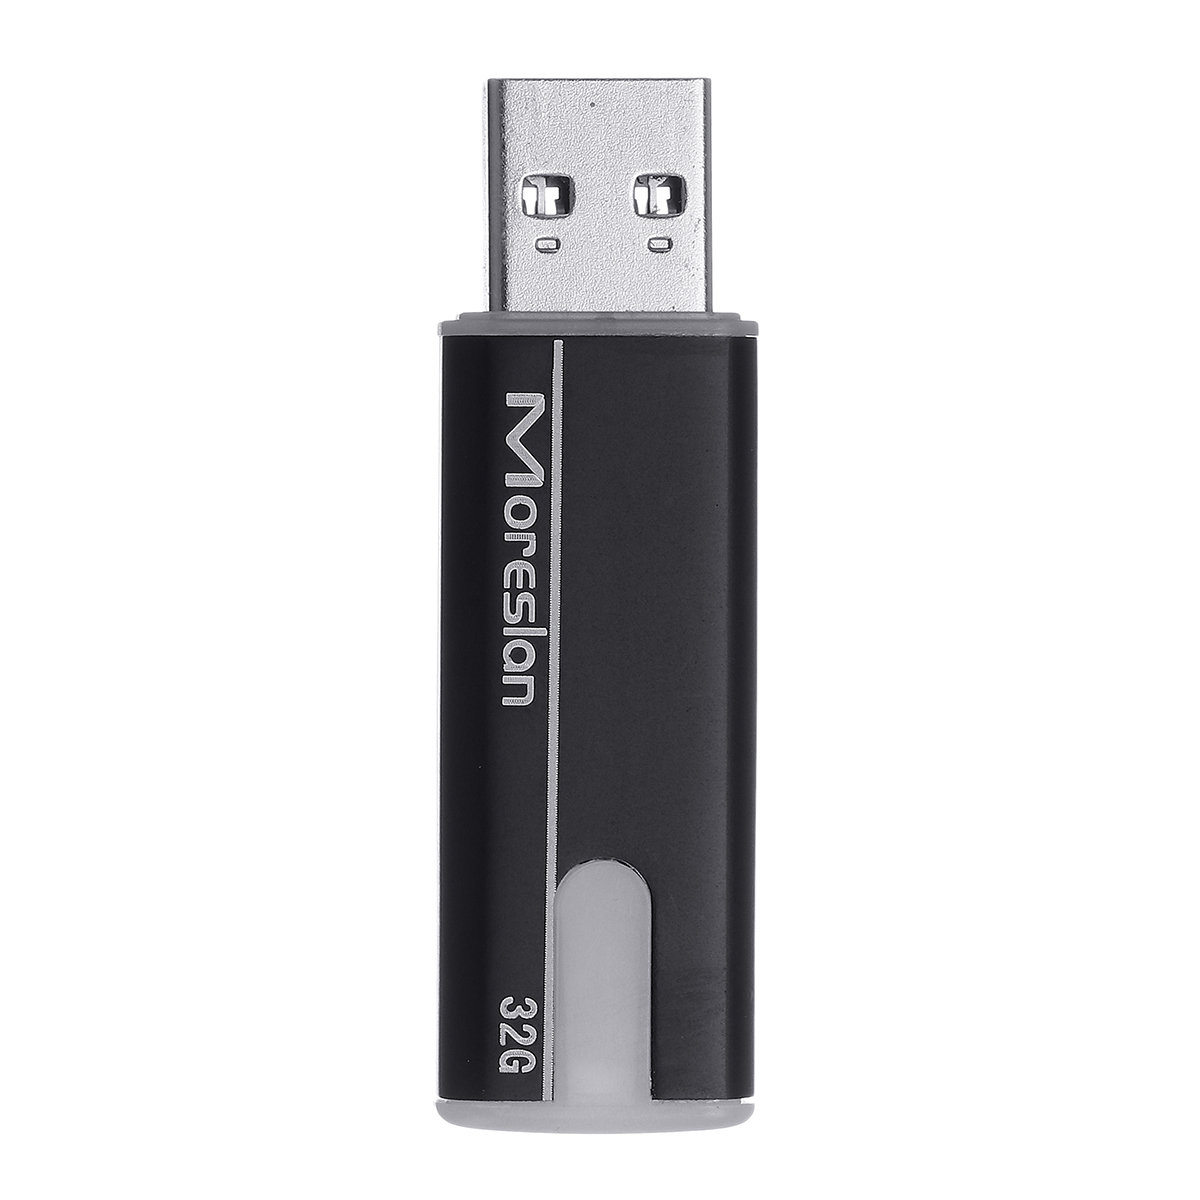 USB Flash Drive 3.0 32G 64G 128G Portable USB Pen Drive Memory Stick USB Disk